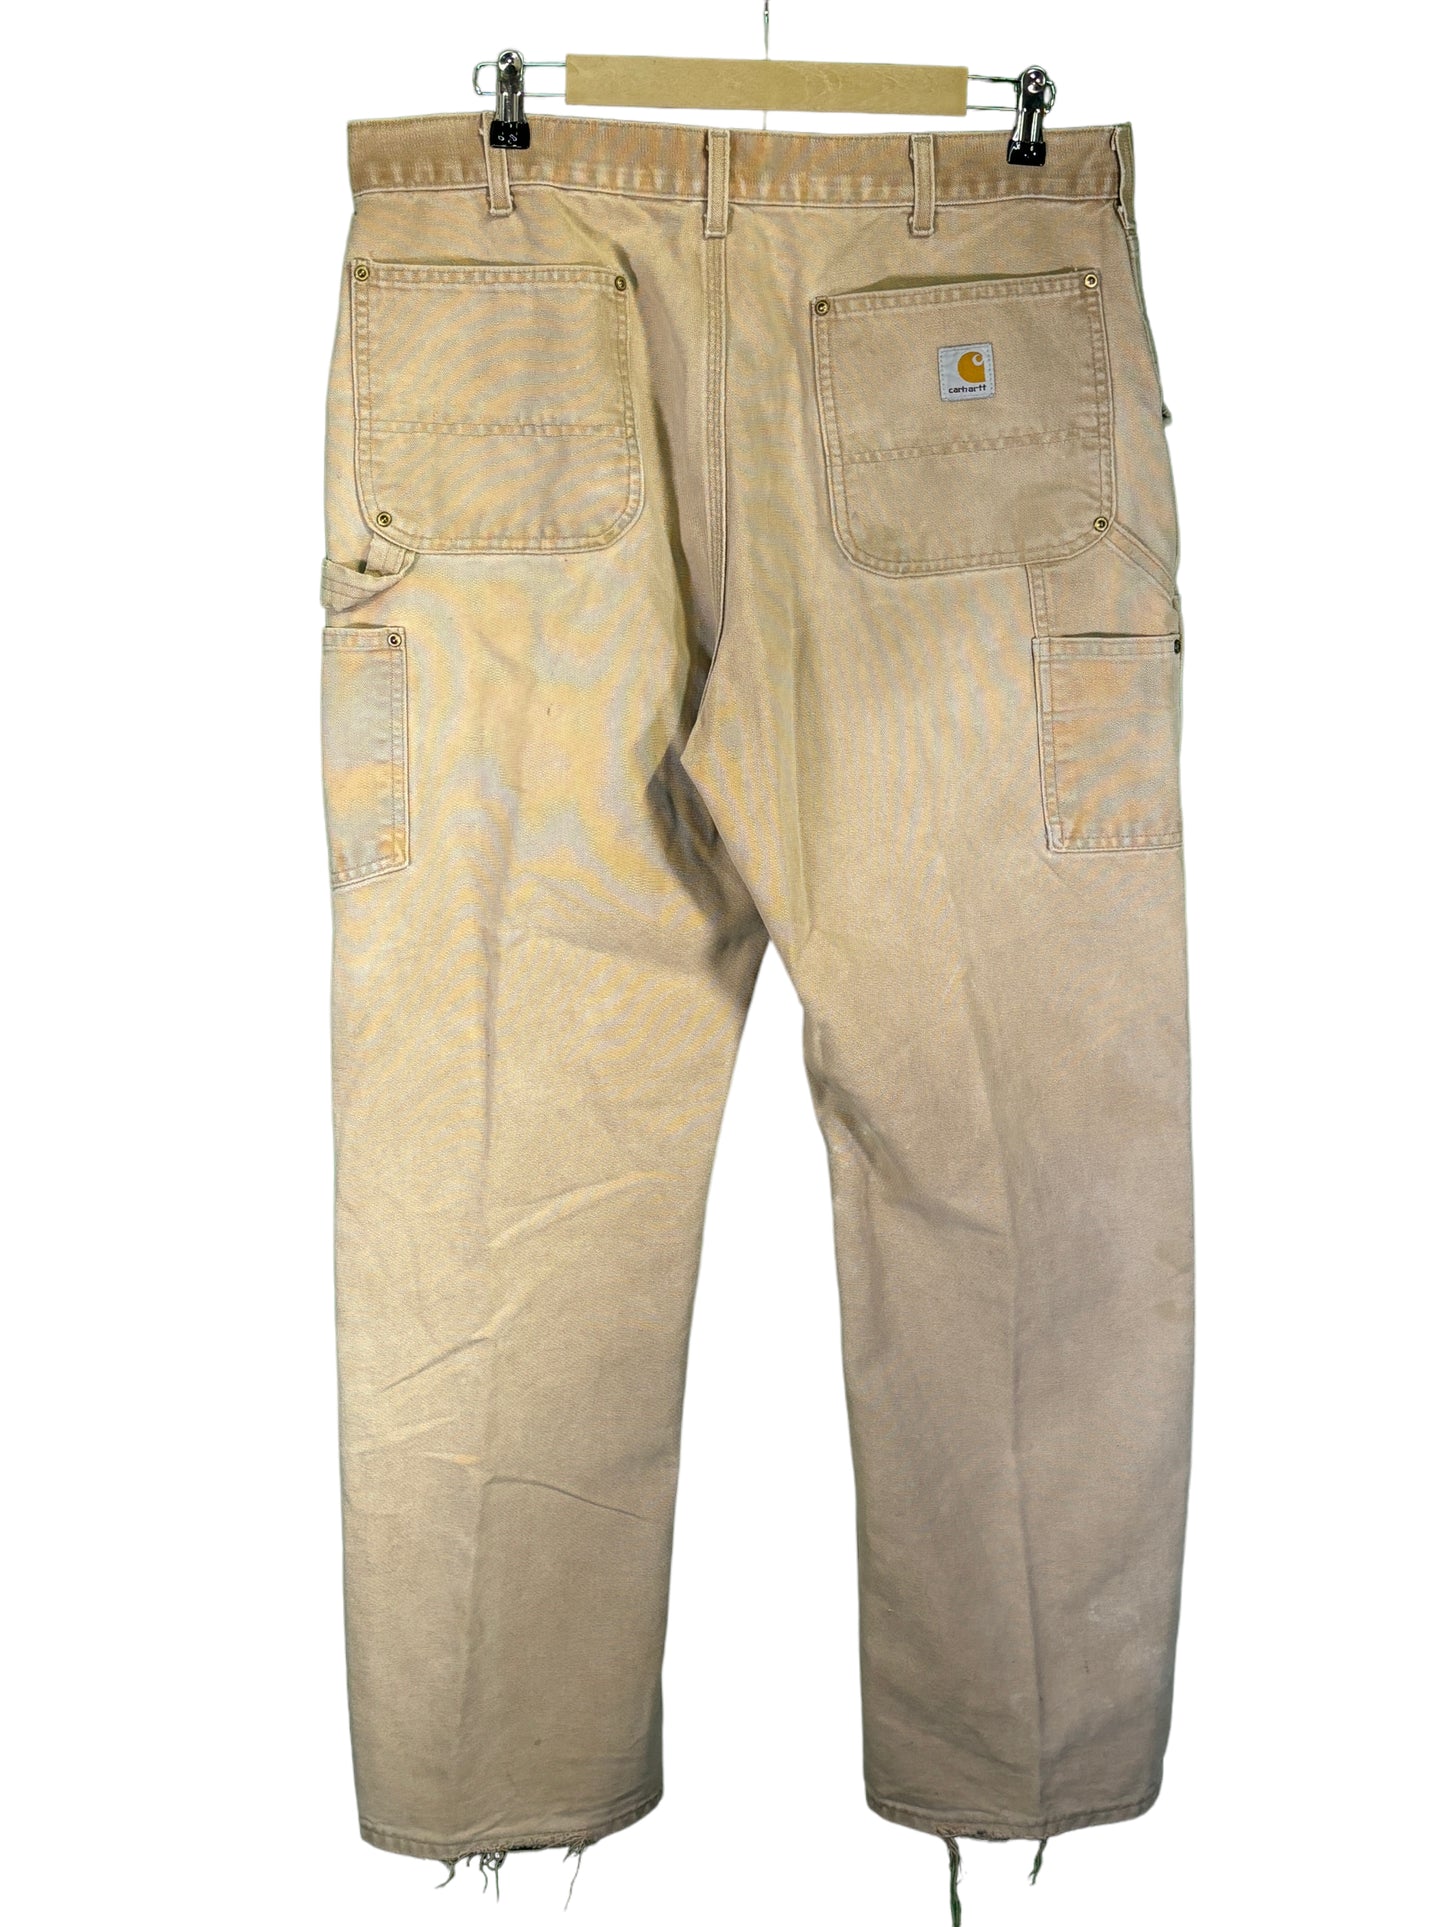 Vintage Carhartt Brown Double Knee Carpenter Pants Size 36x31